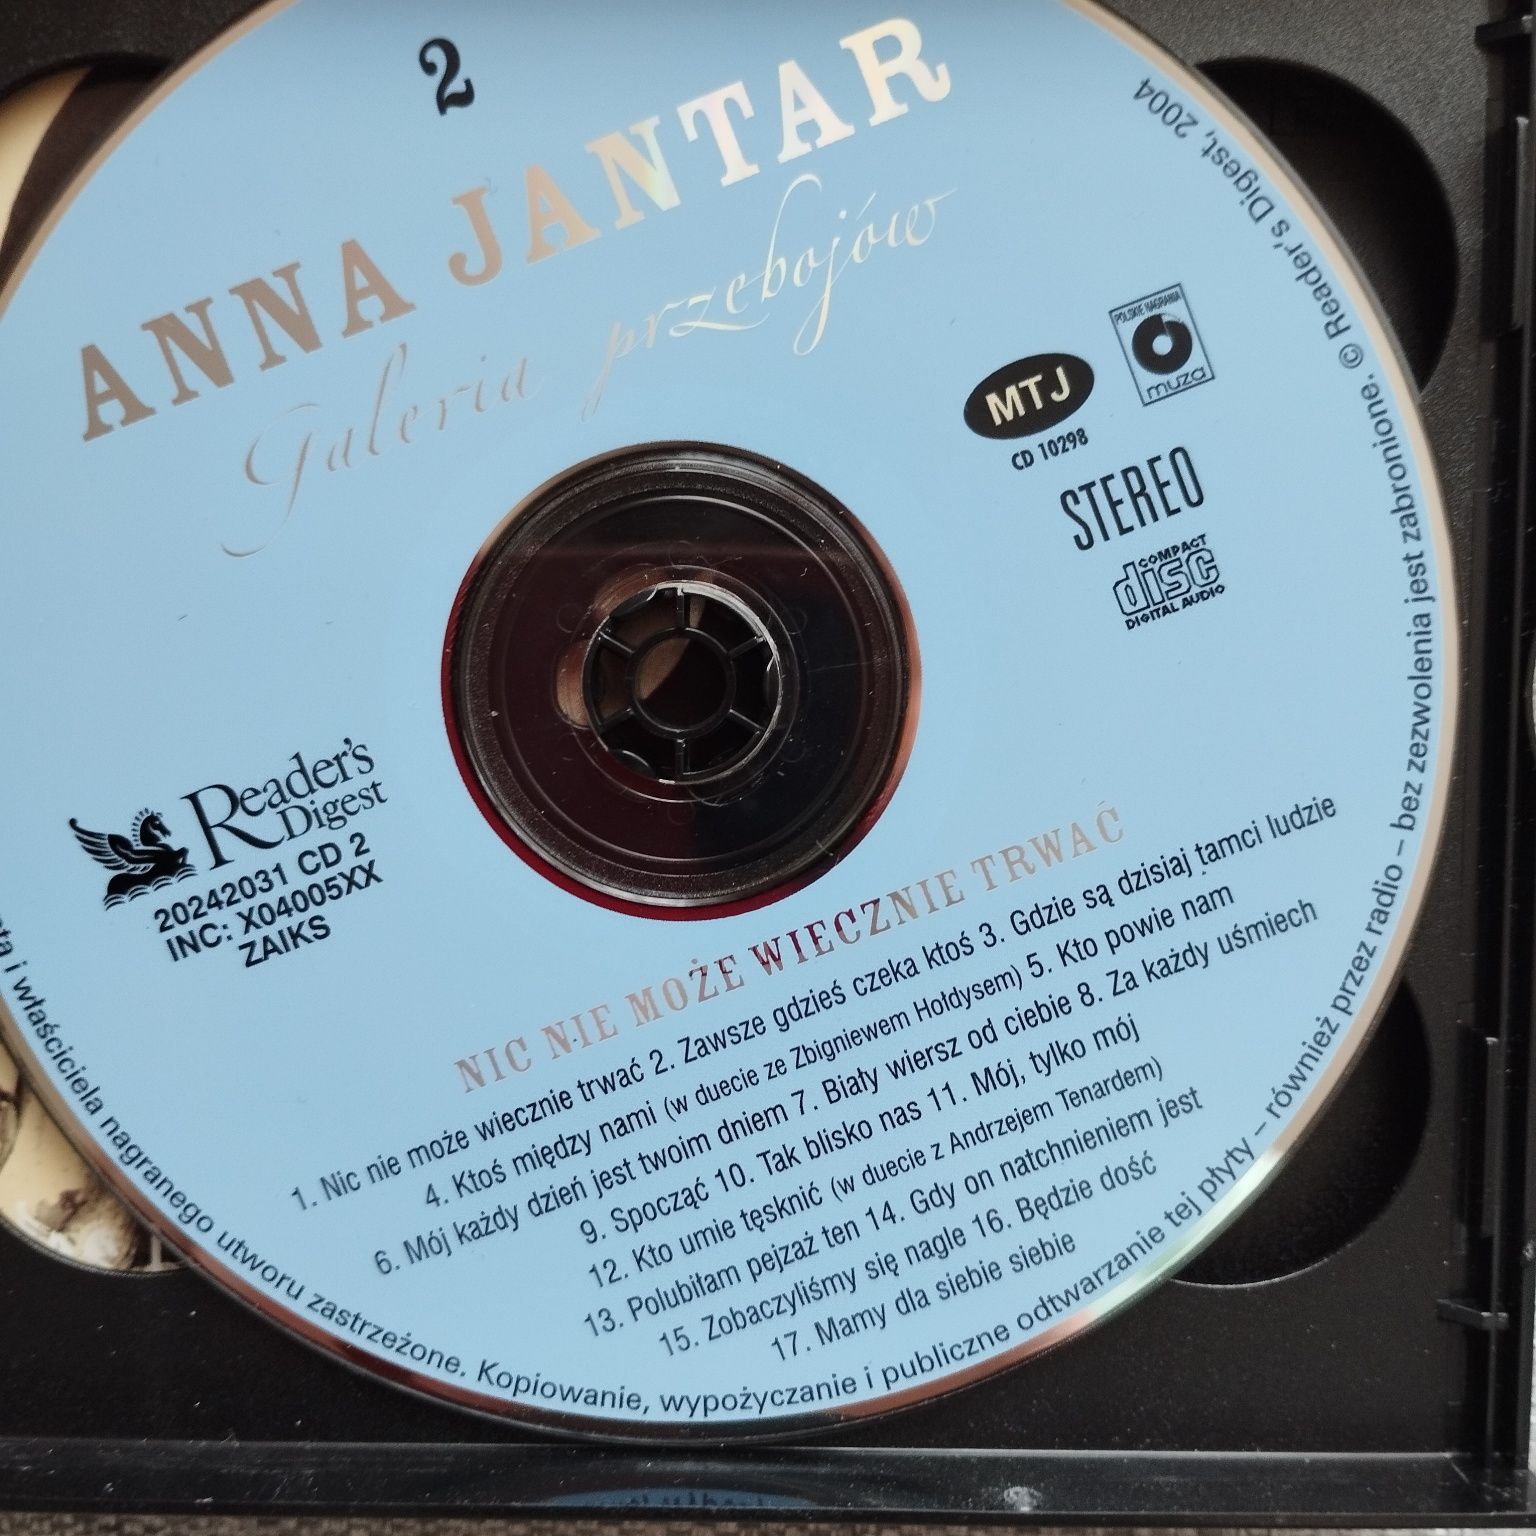 Anna Jantar - Galeria przebojów 3 cd